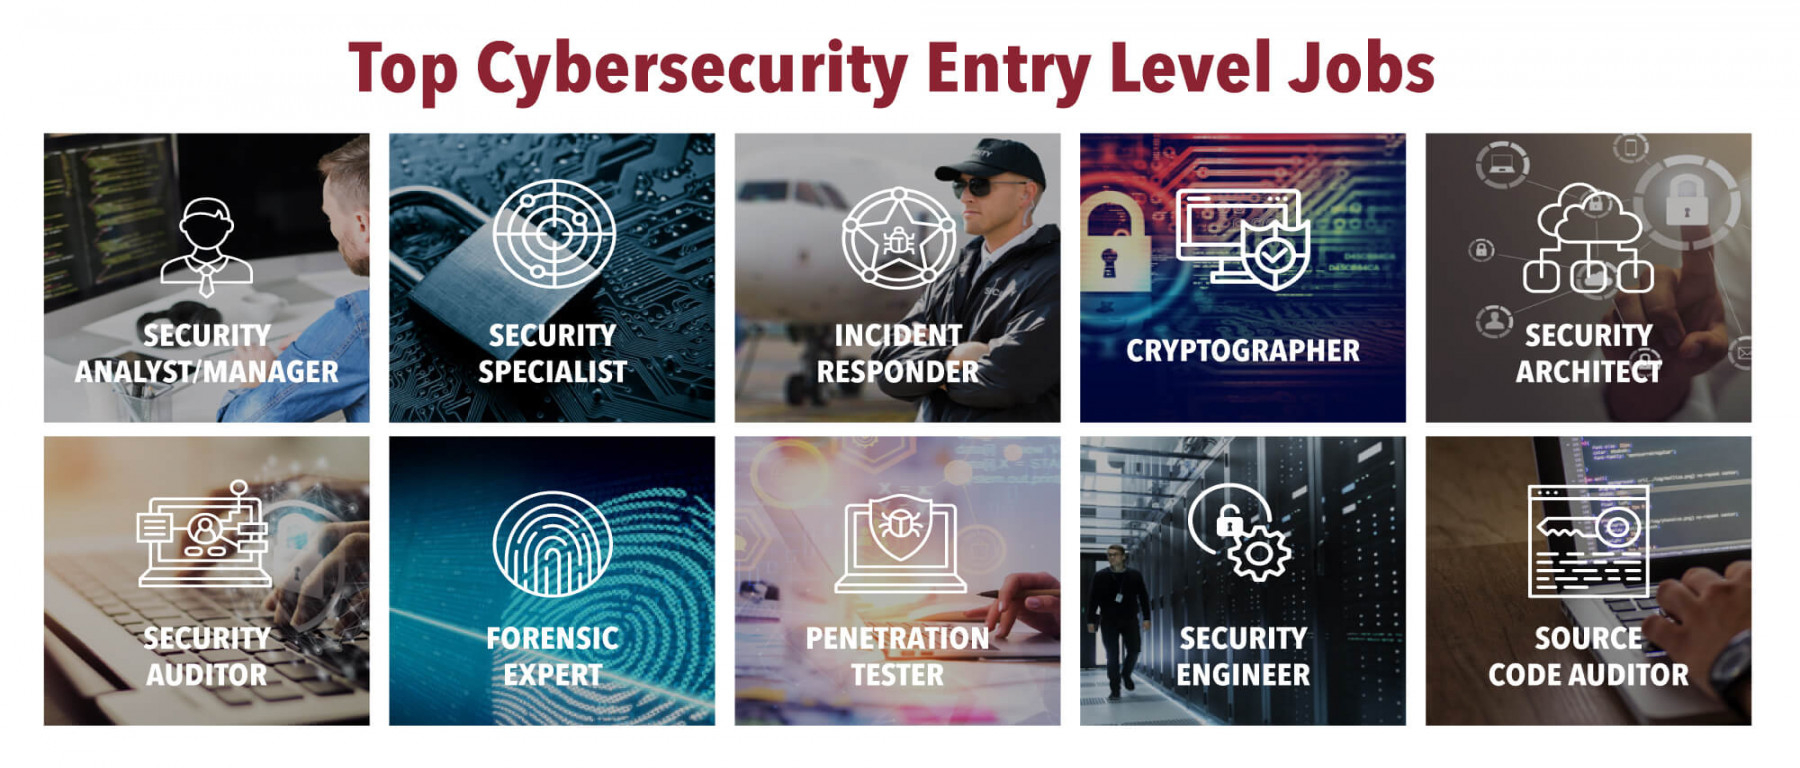 Ten Entry-Level Jobs in Cybersecurity - University of Denver Boot